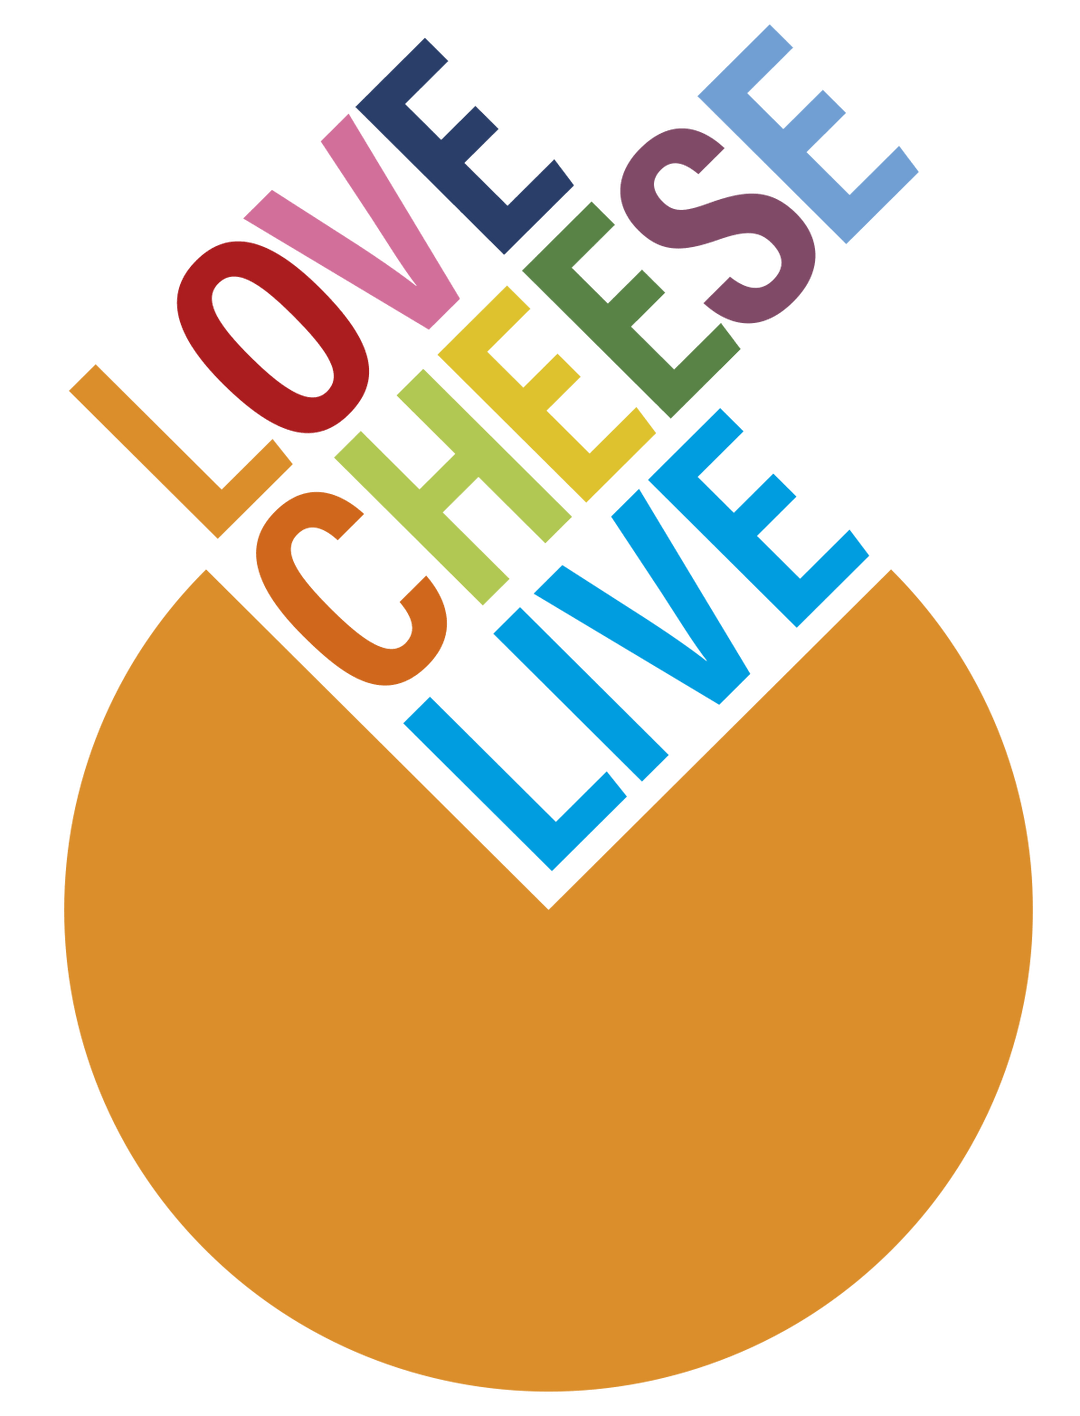 Love Cheese Live logo.